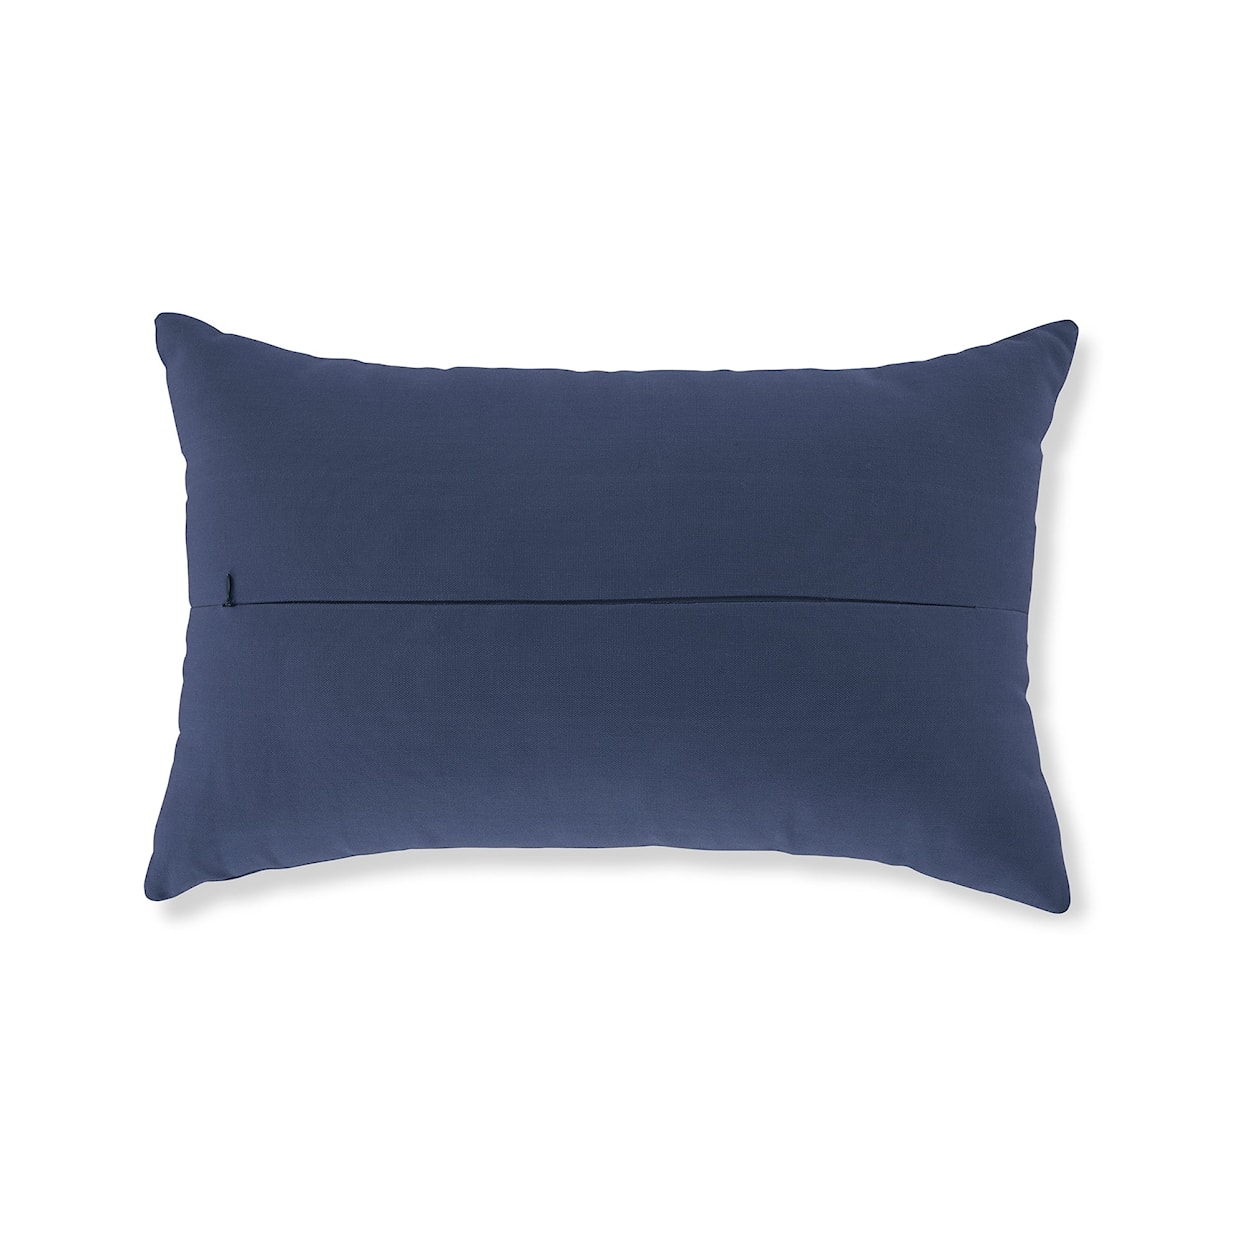 Ashley Furniture Signature Design Velvetley Pillow (Set of 4)